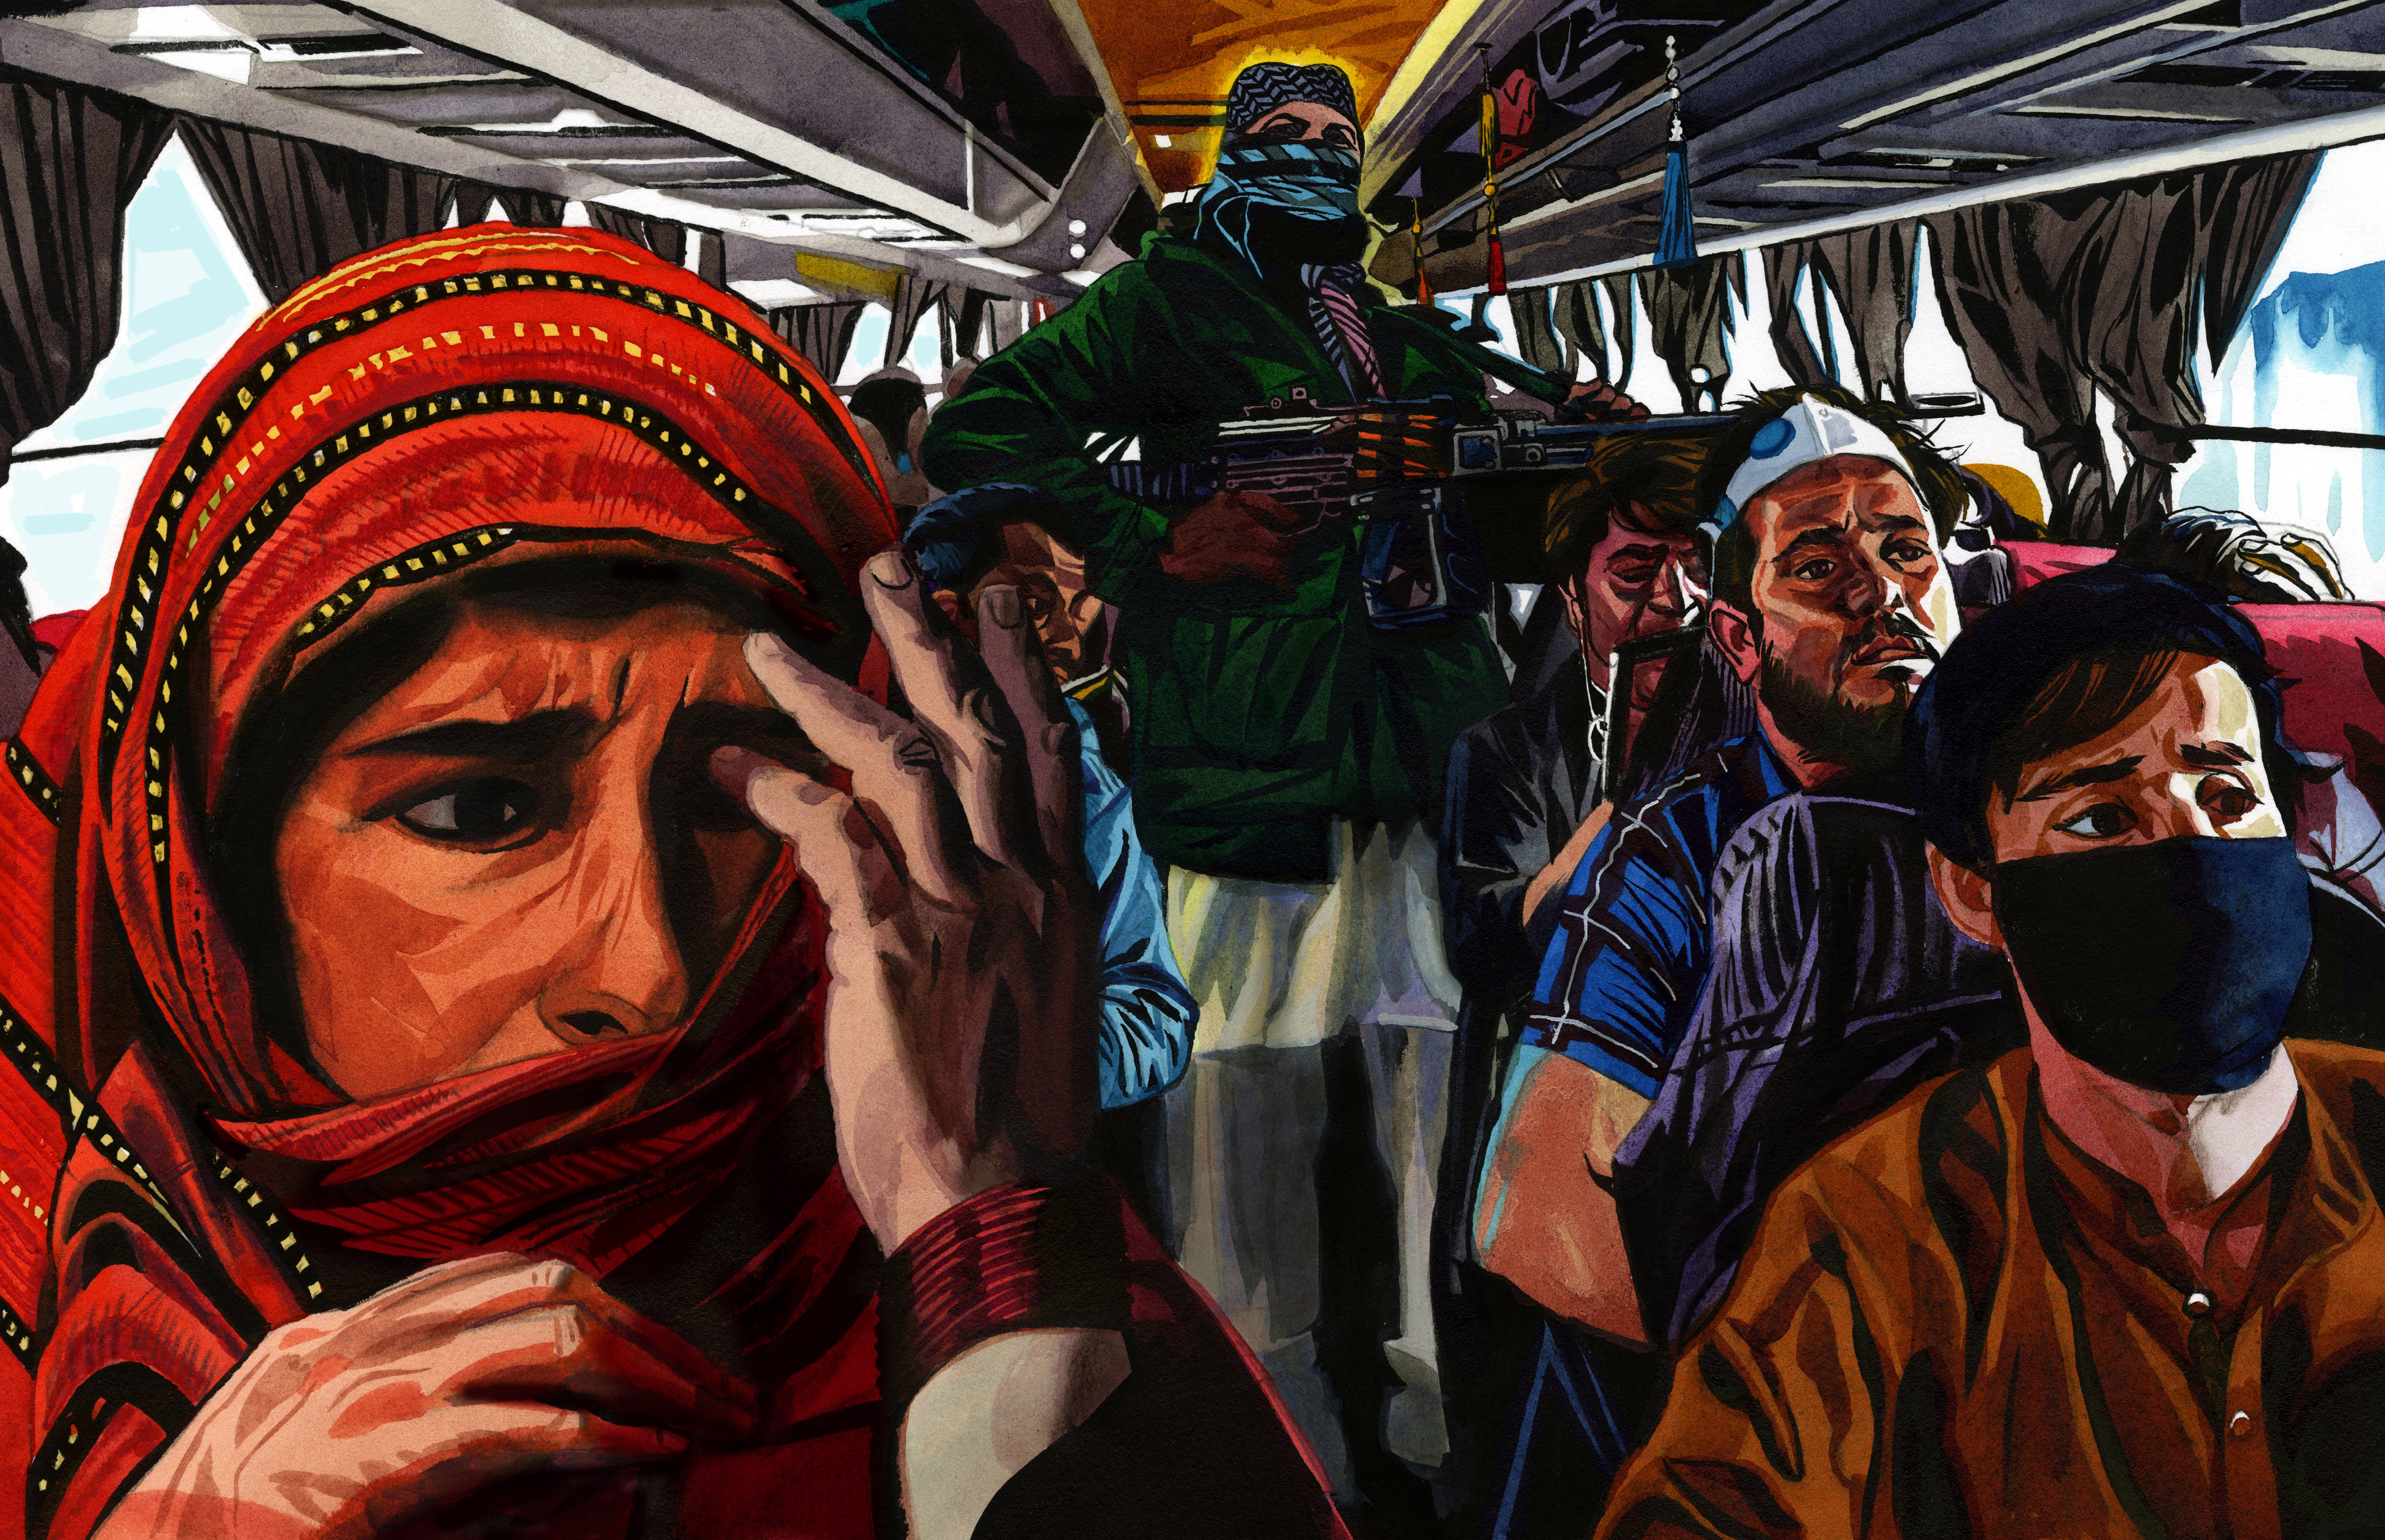 Bus in Afghanistan illustration